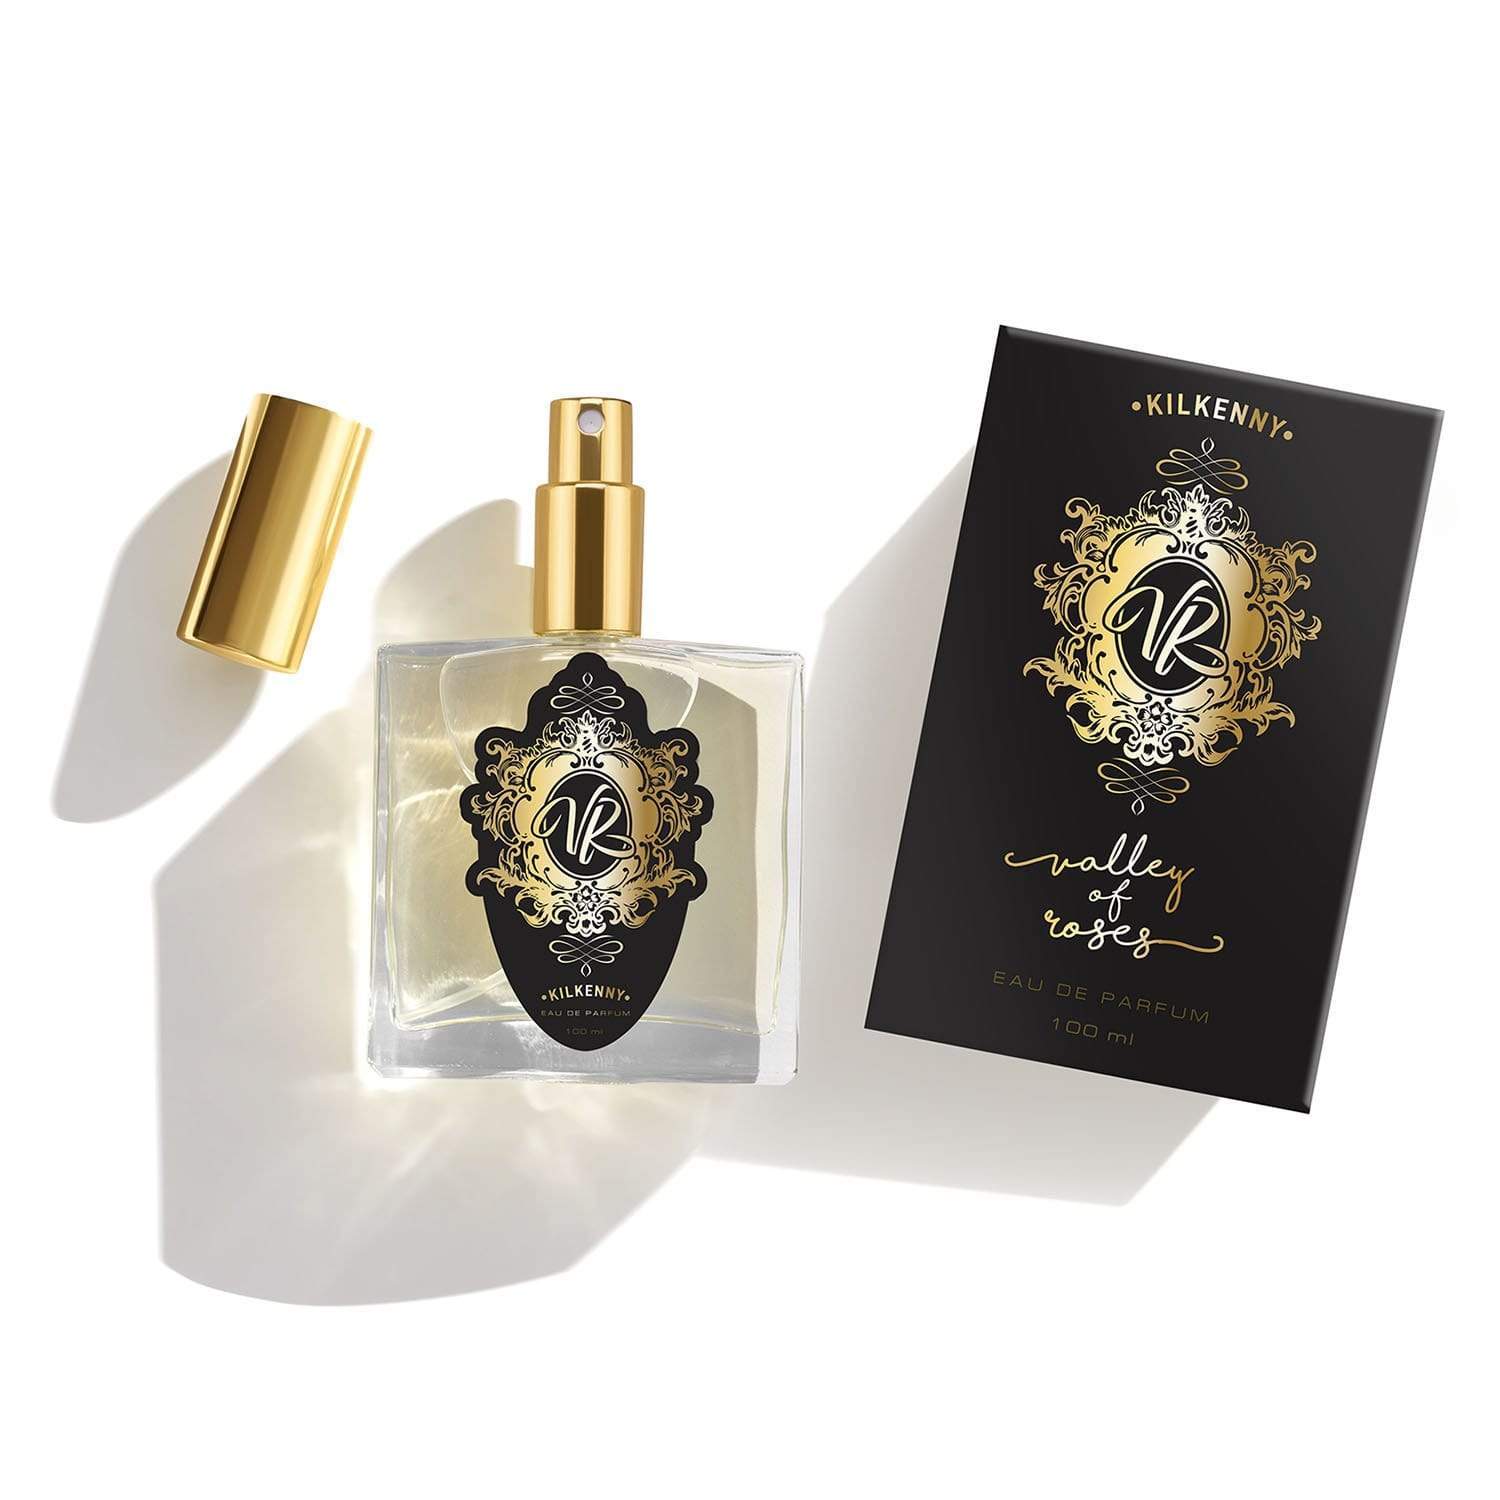 Inspired by Armani's Sì - Woman Perfume - Woody Freesia